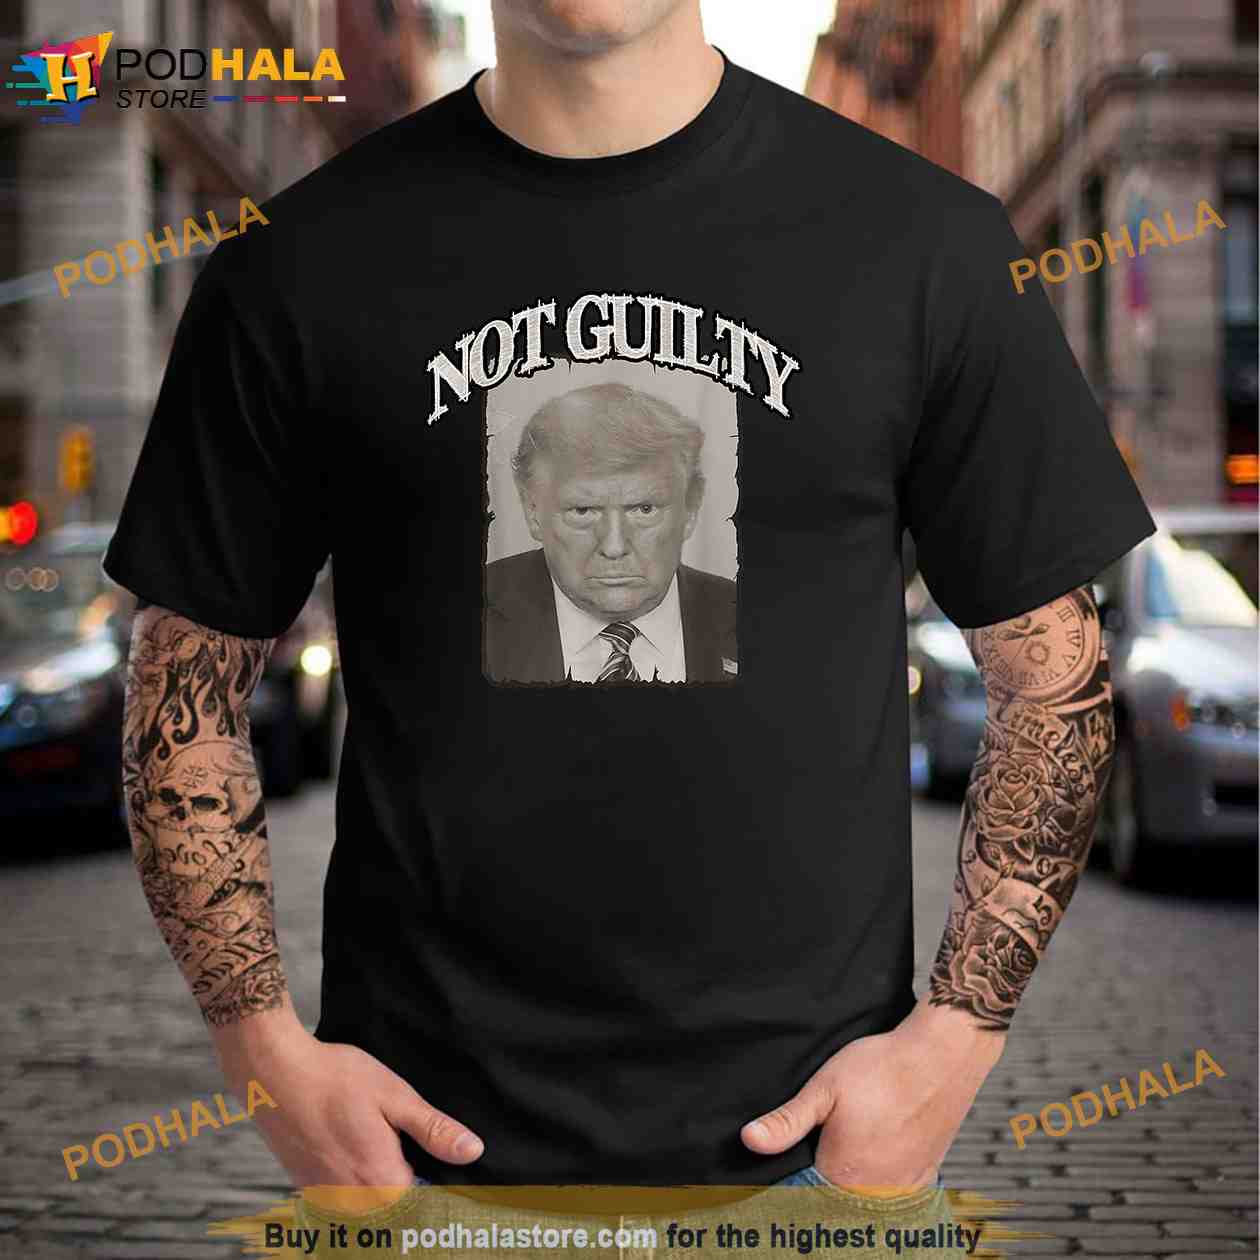 Trump Mugshot GA Guilty Af 2023 Tshirt Trump Guilty af Tshirt